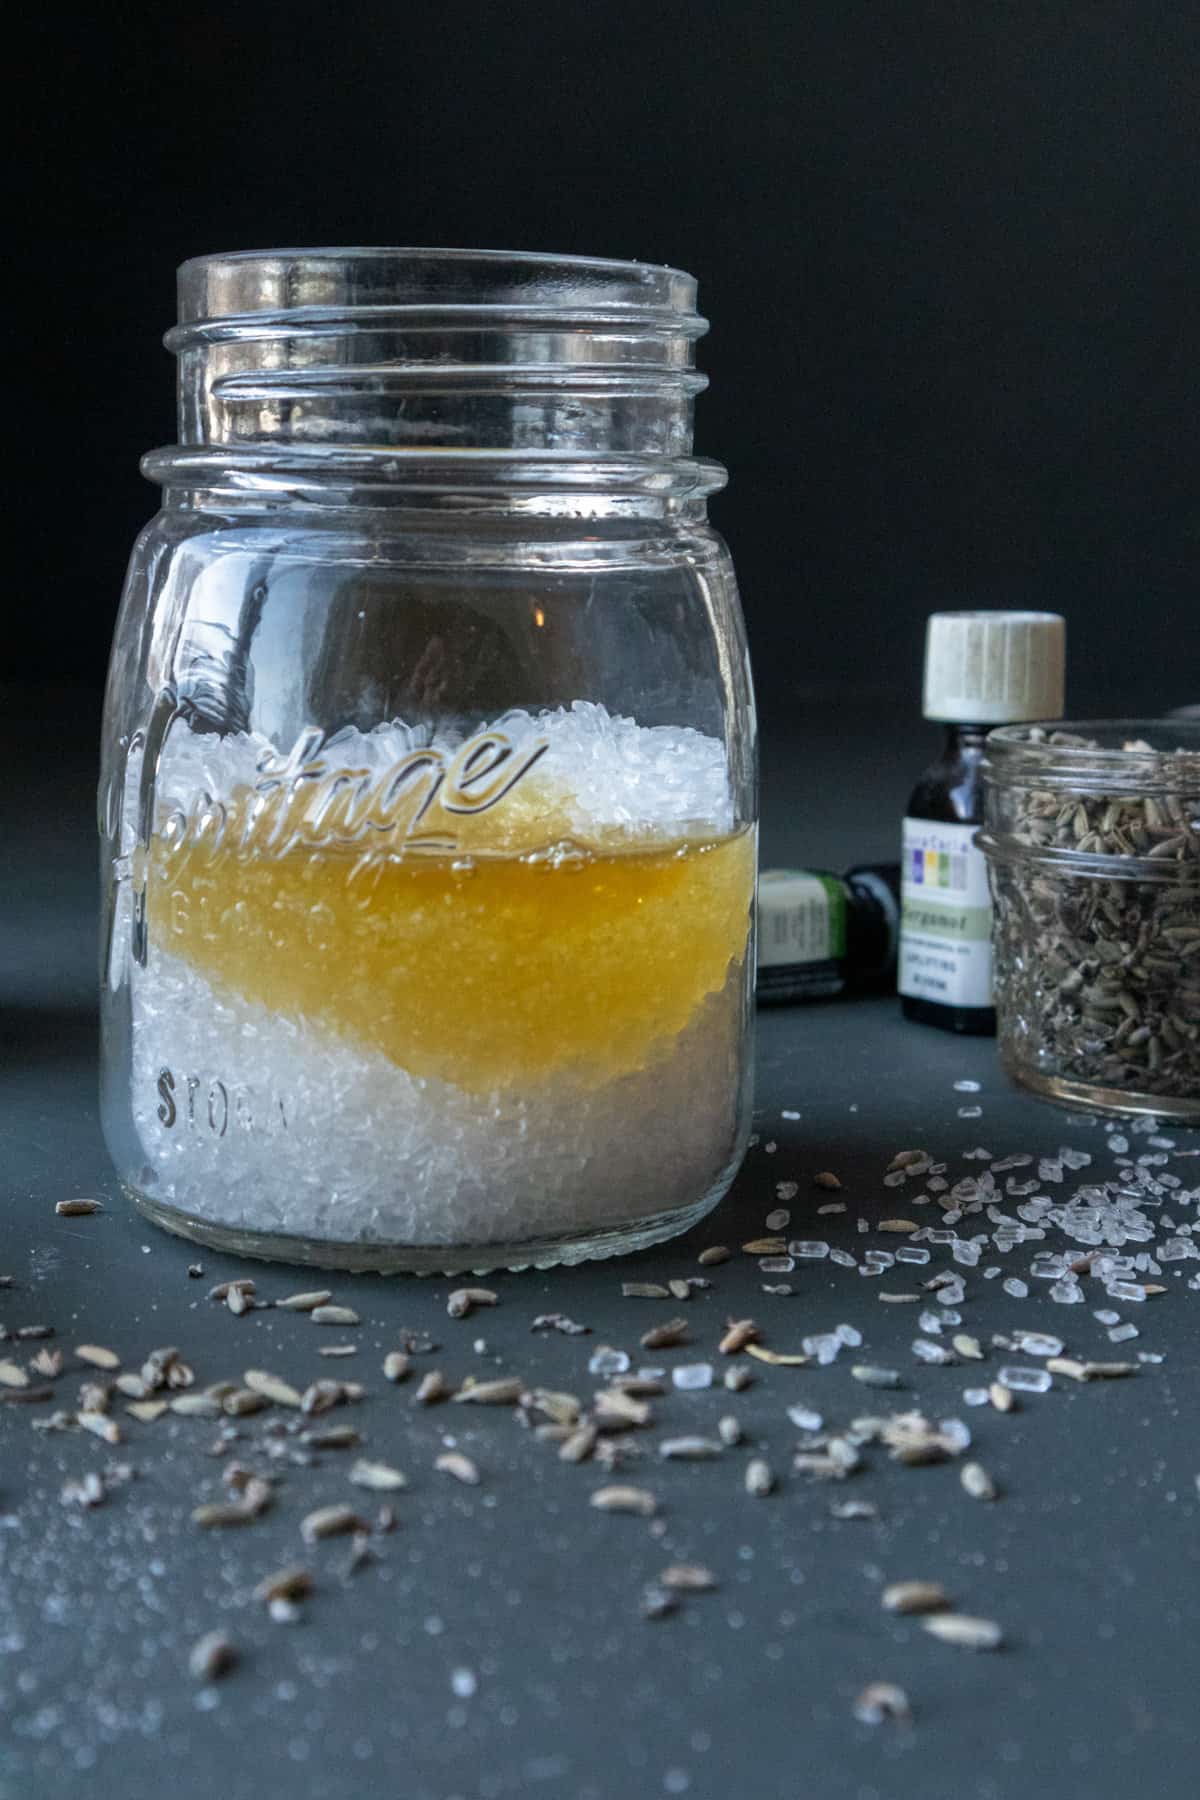 A DIY salt scrub made with epsom salts, coconut oil, and shea butter